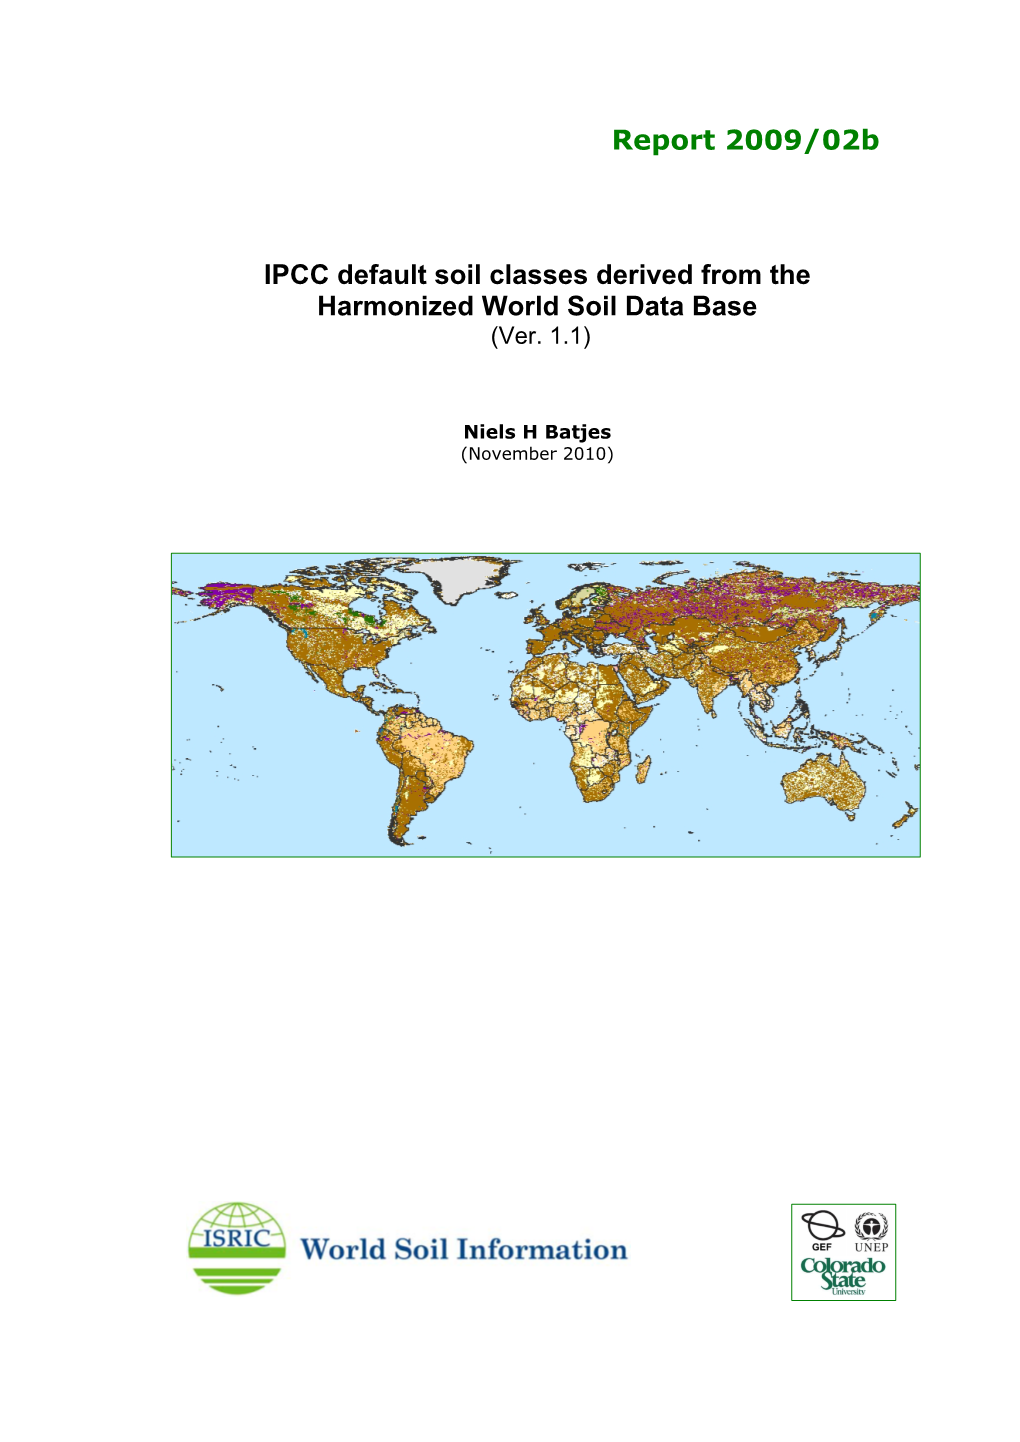 IPCC Default Soil Classes Derived from the Harmonmized World Soil Data